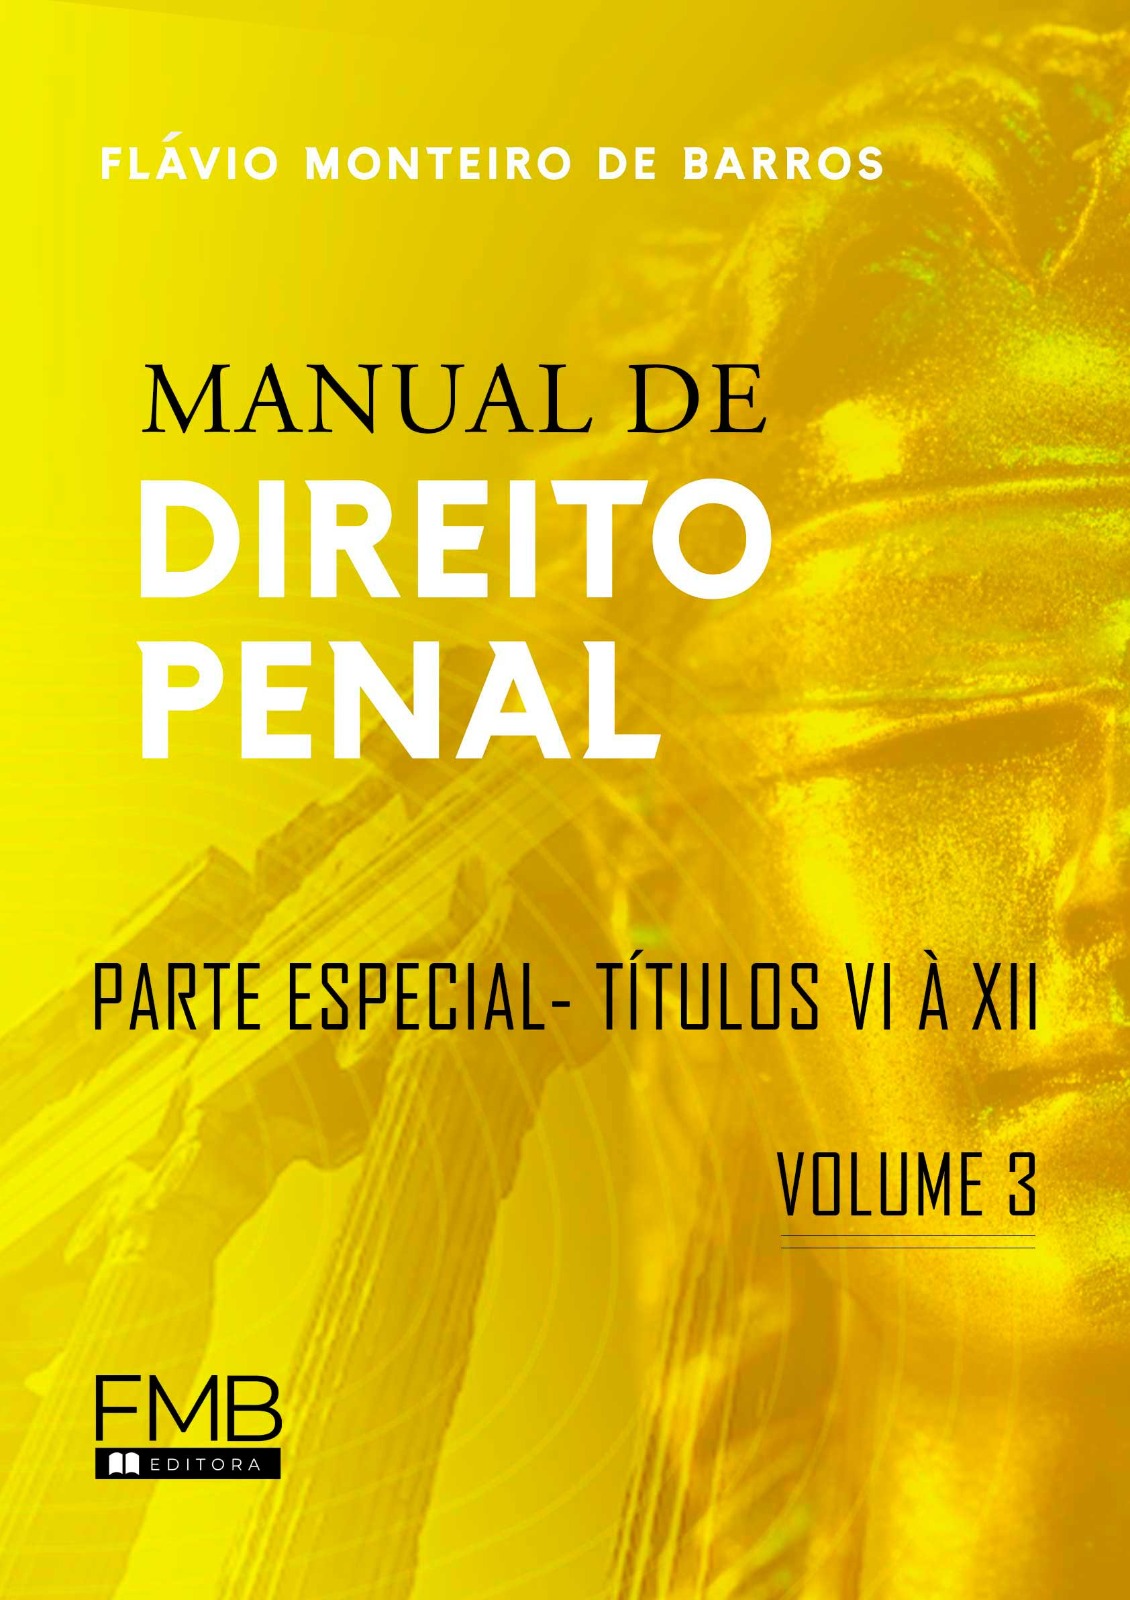 Manual de Direito Penal - Volume 3 - Parte Especial - Títulos VI à XII